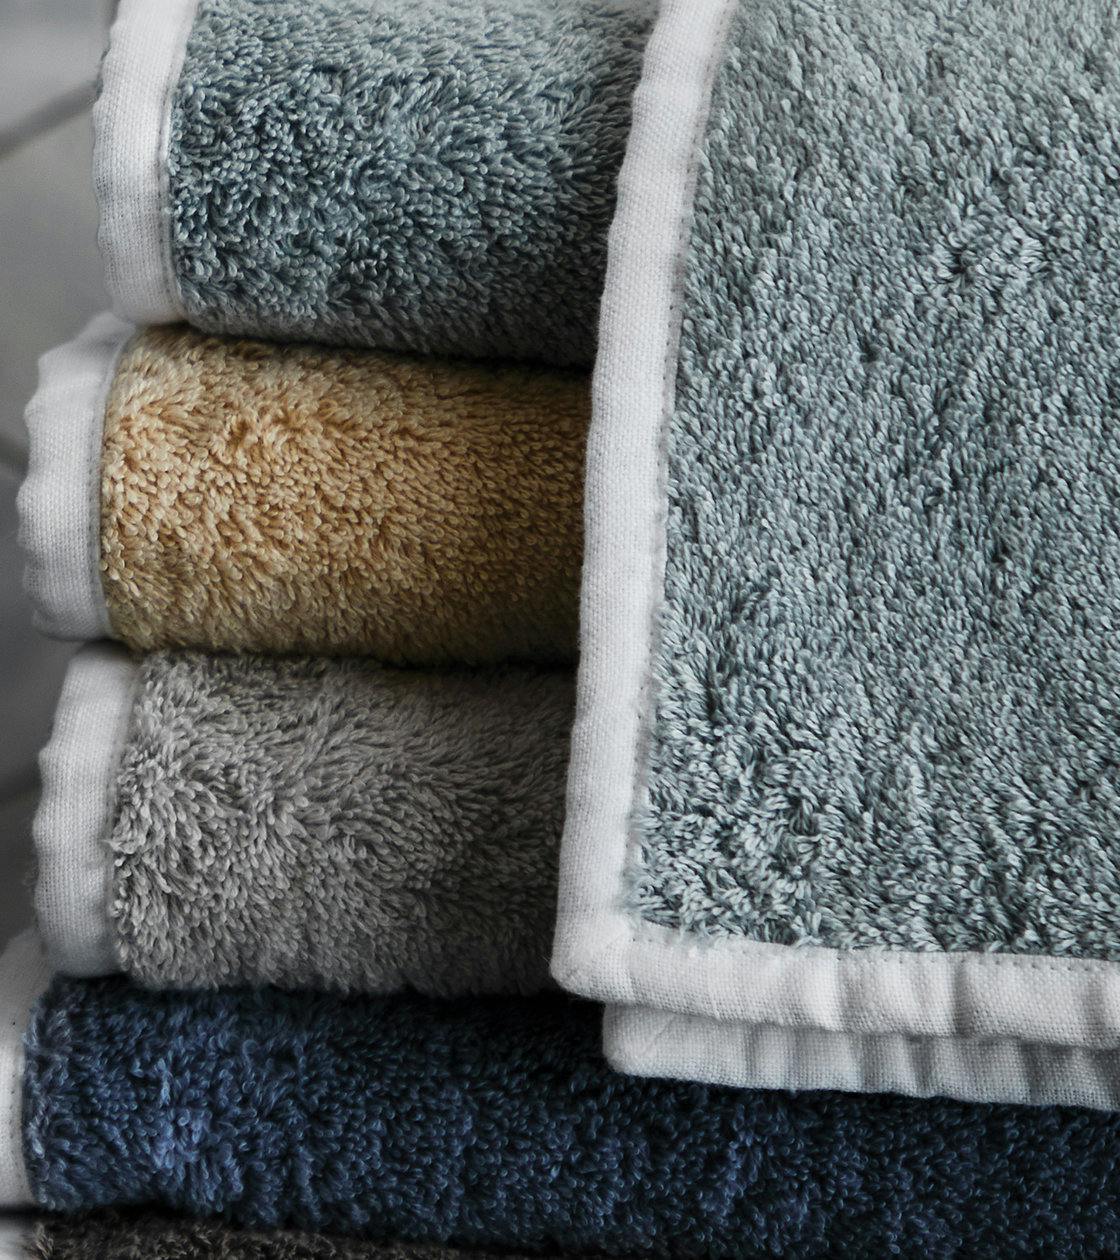 Matouk Beach Road Bath Towels - Bath Towel | Tan Stripe